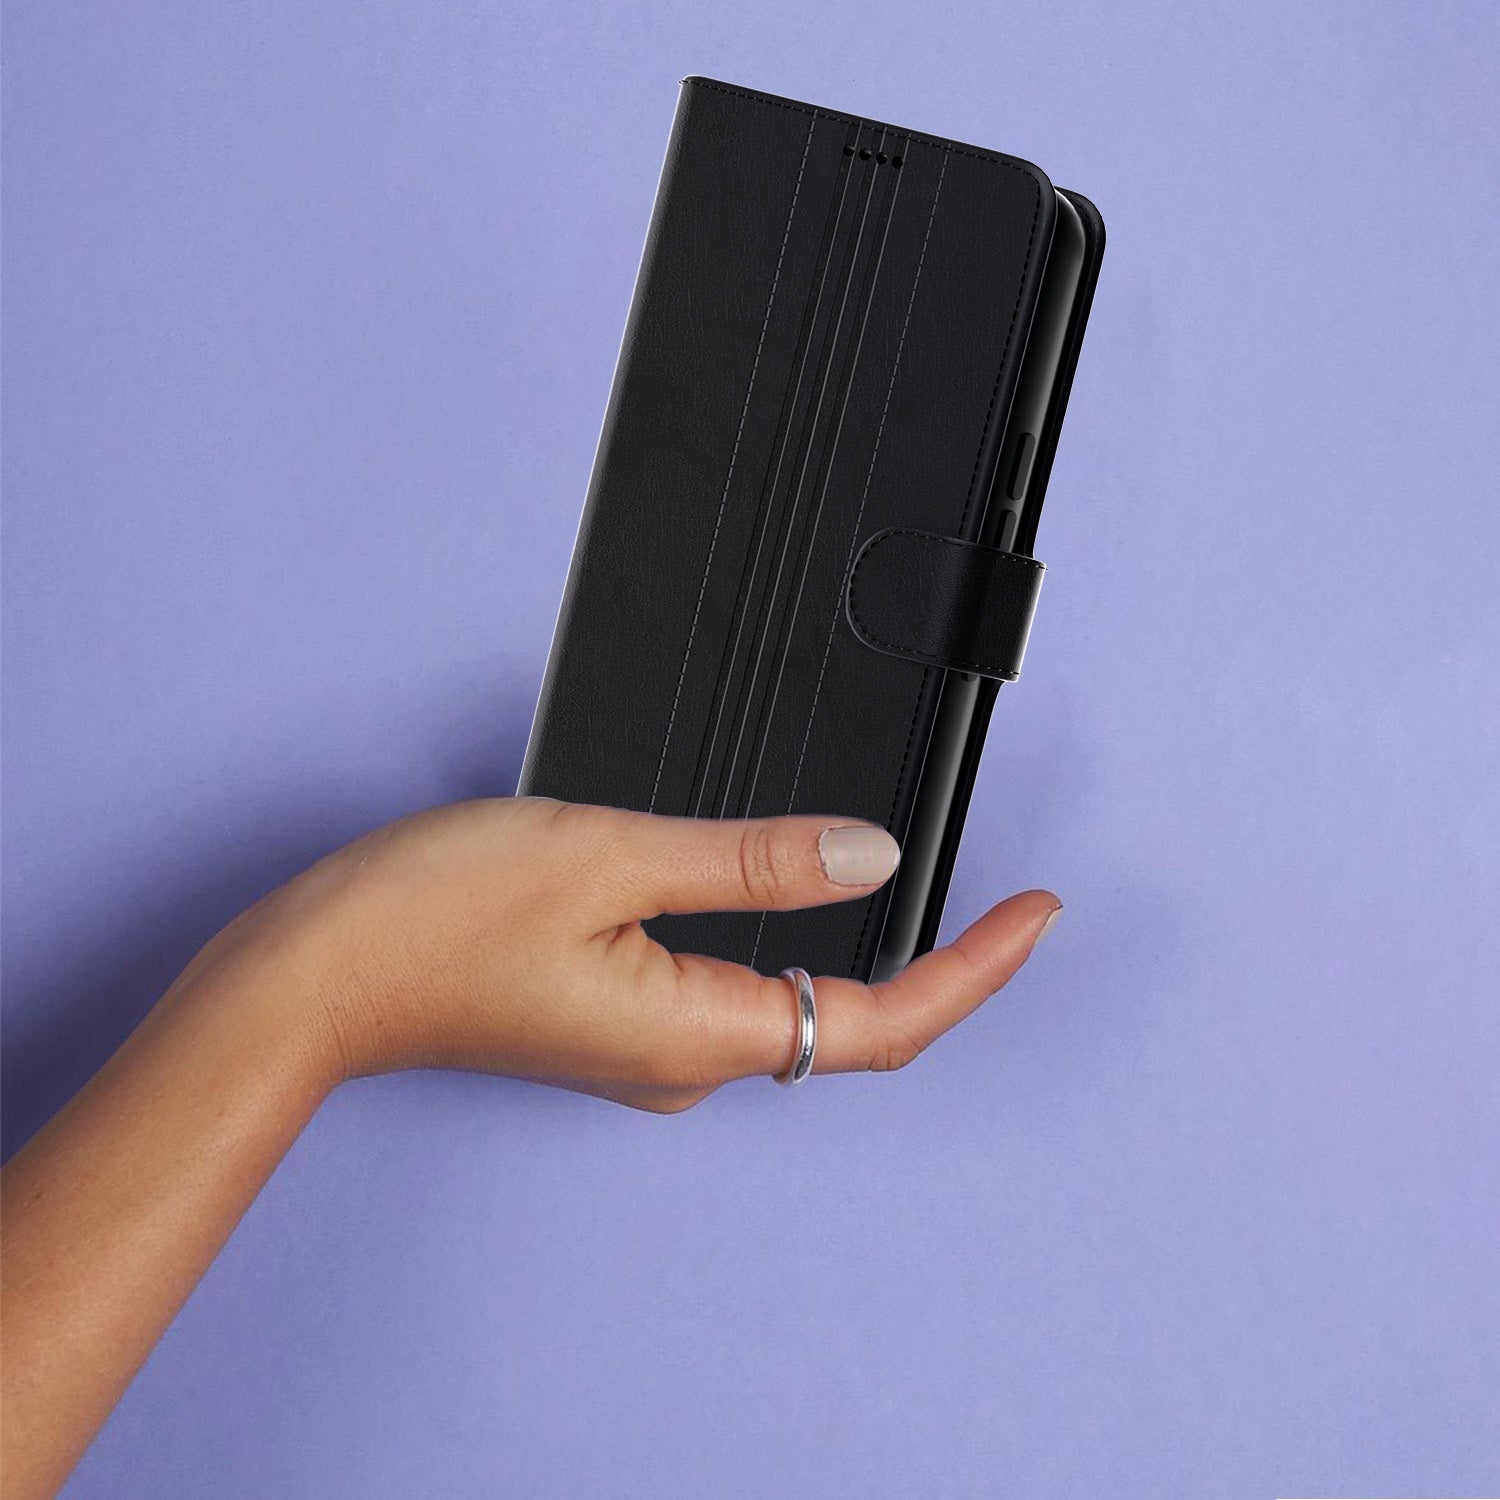 U-CASE Flip Cover for Vivo S1 Pro Vegan Foldable Stand & Pocket Magnetic Closure in hand